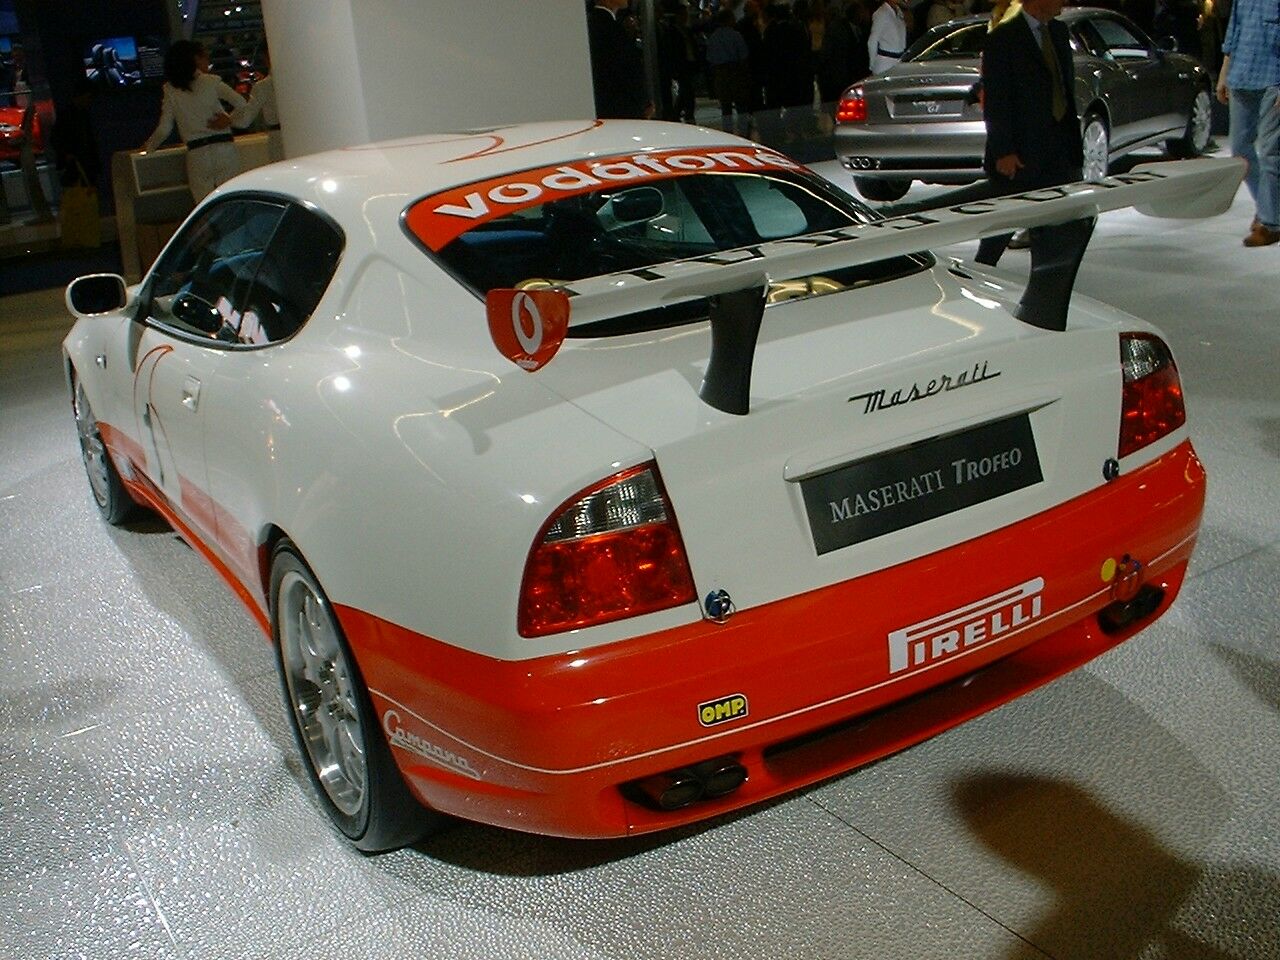 Maserati Trofeo at the 2003 Frankfurt Motor Show